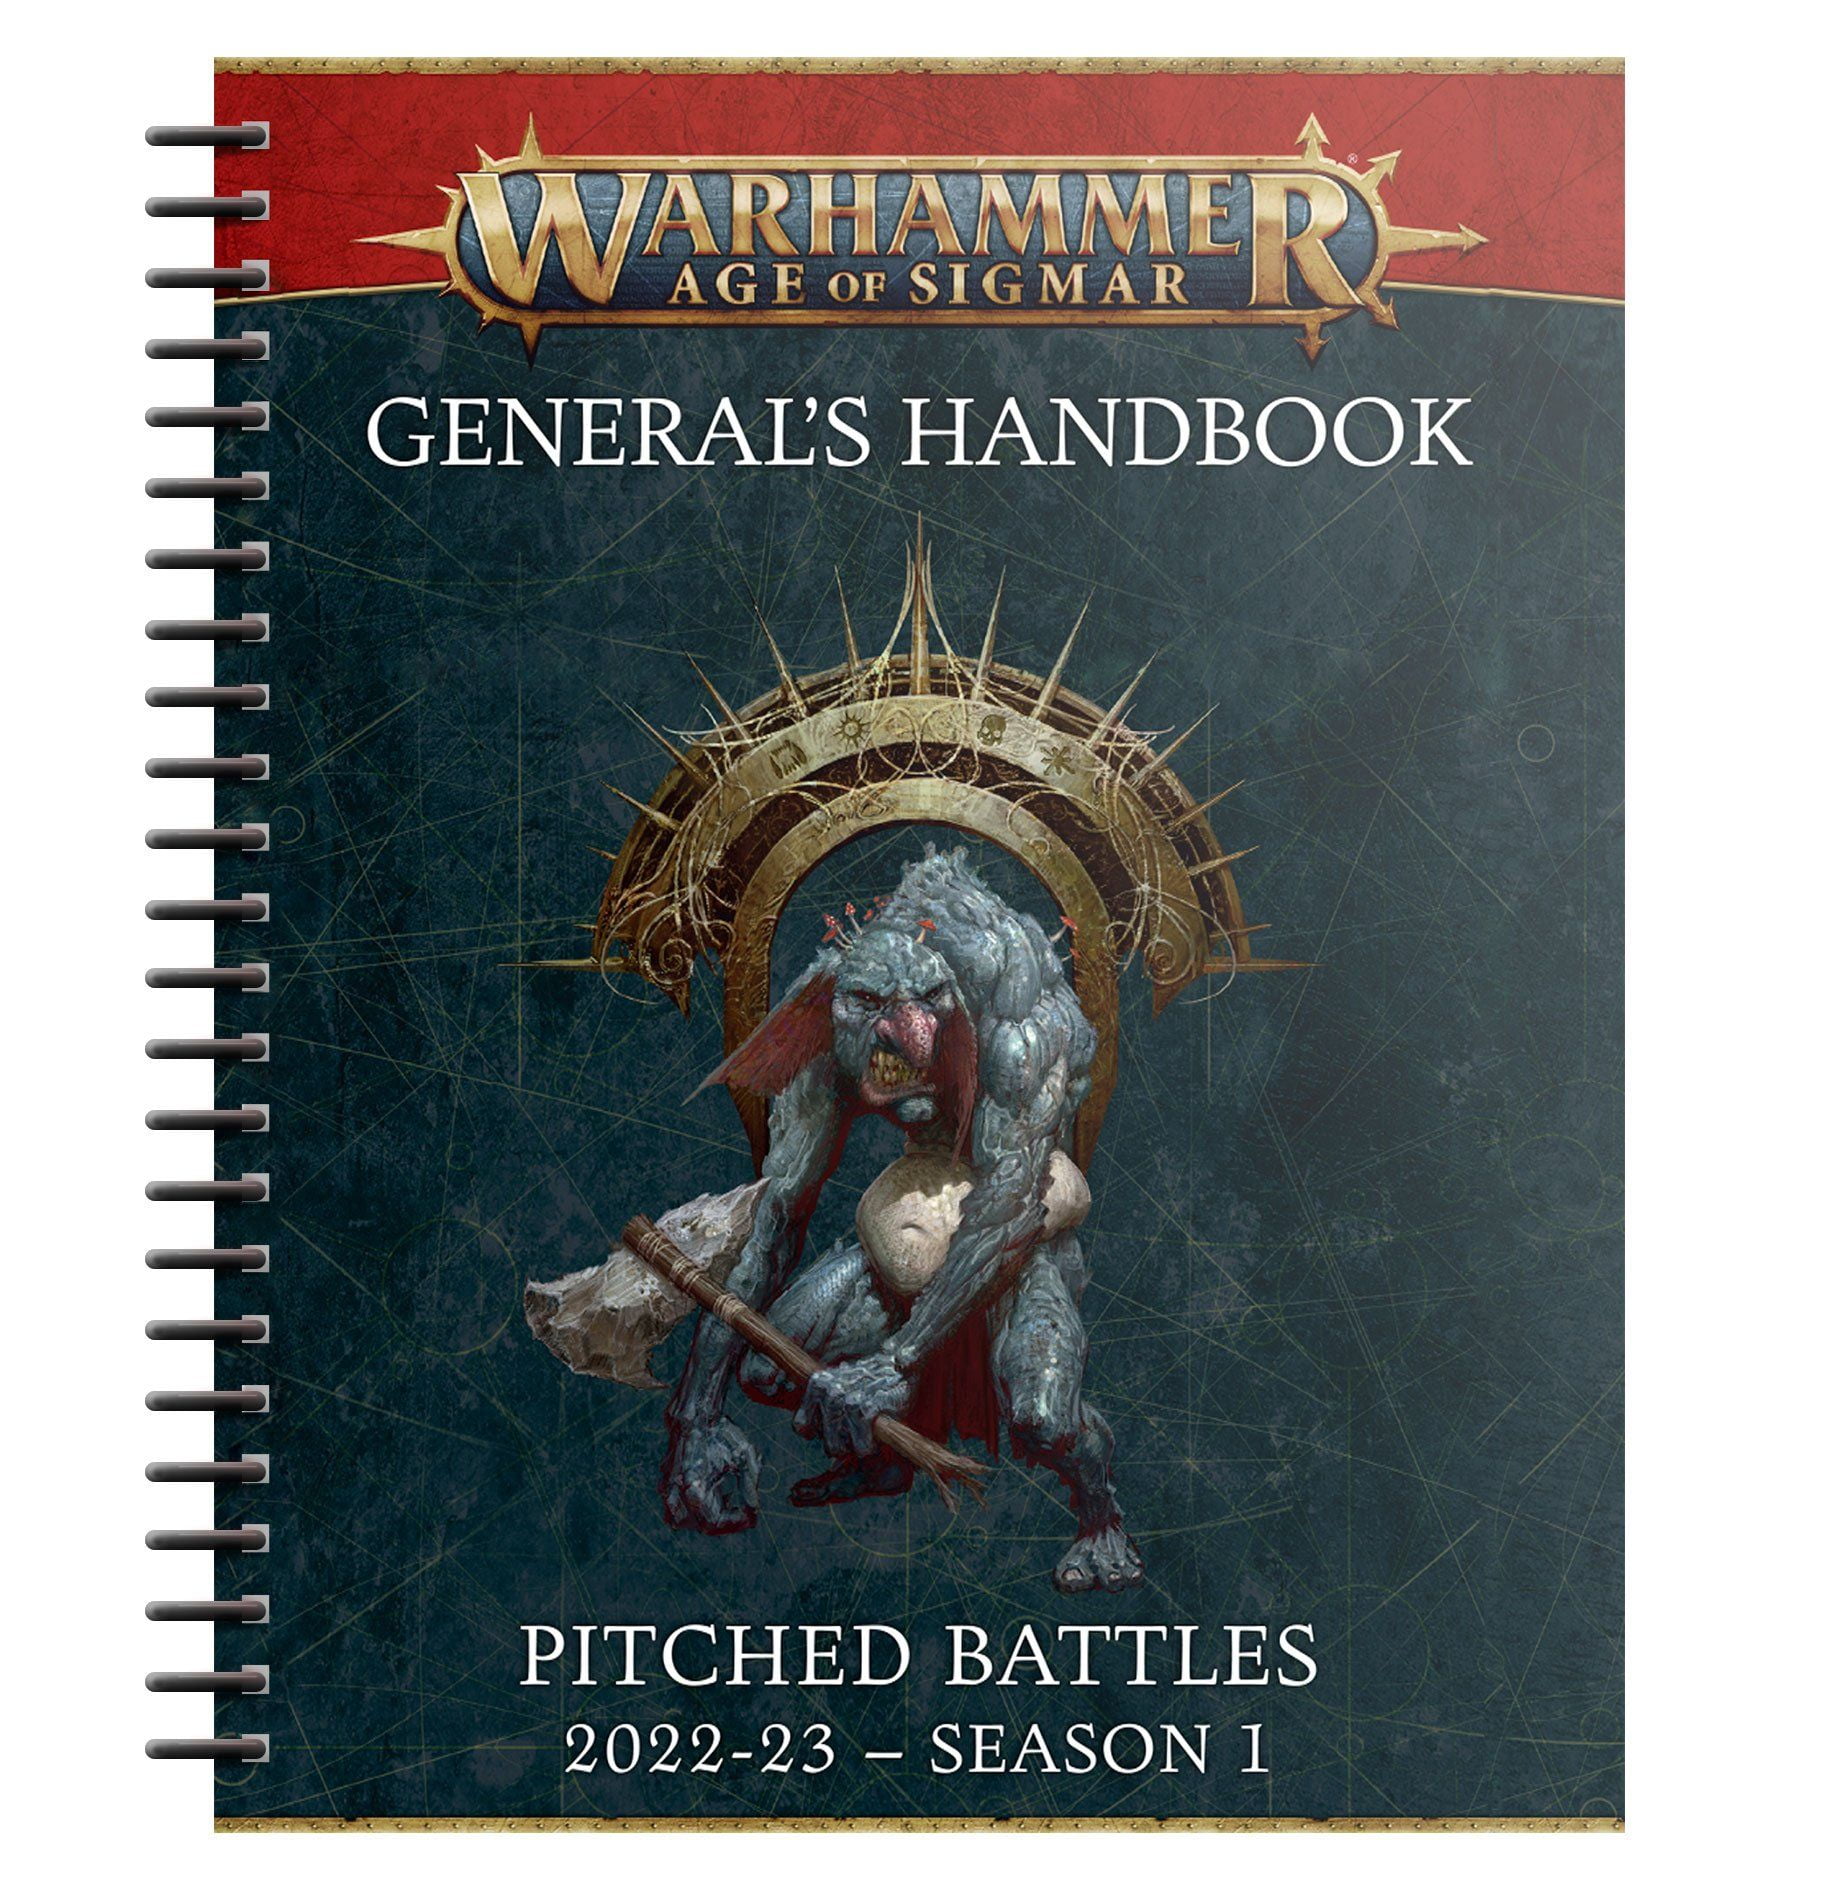 Warhammer Age of Sigmar: General's Handbook: Pitched Battles 2022-23 Season 1 - English